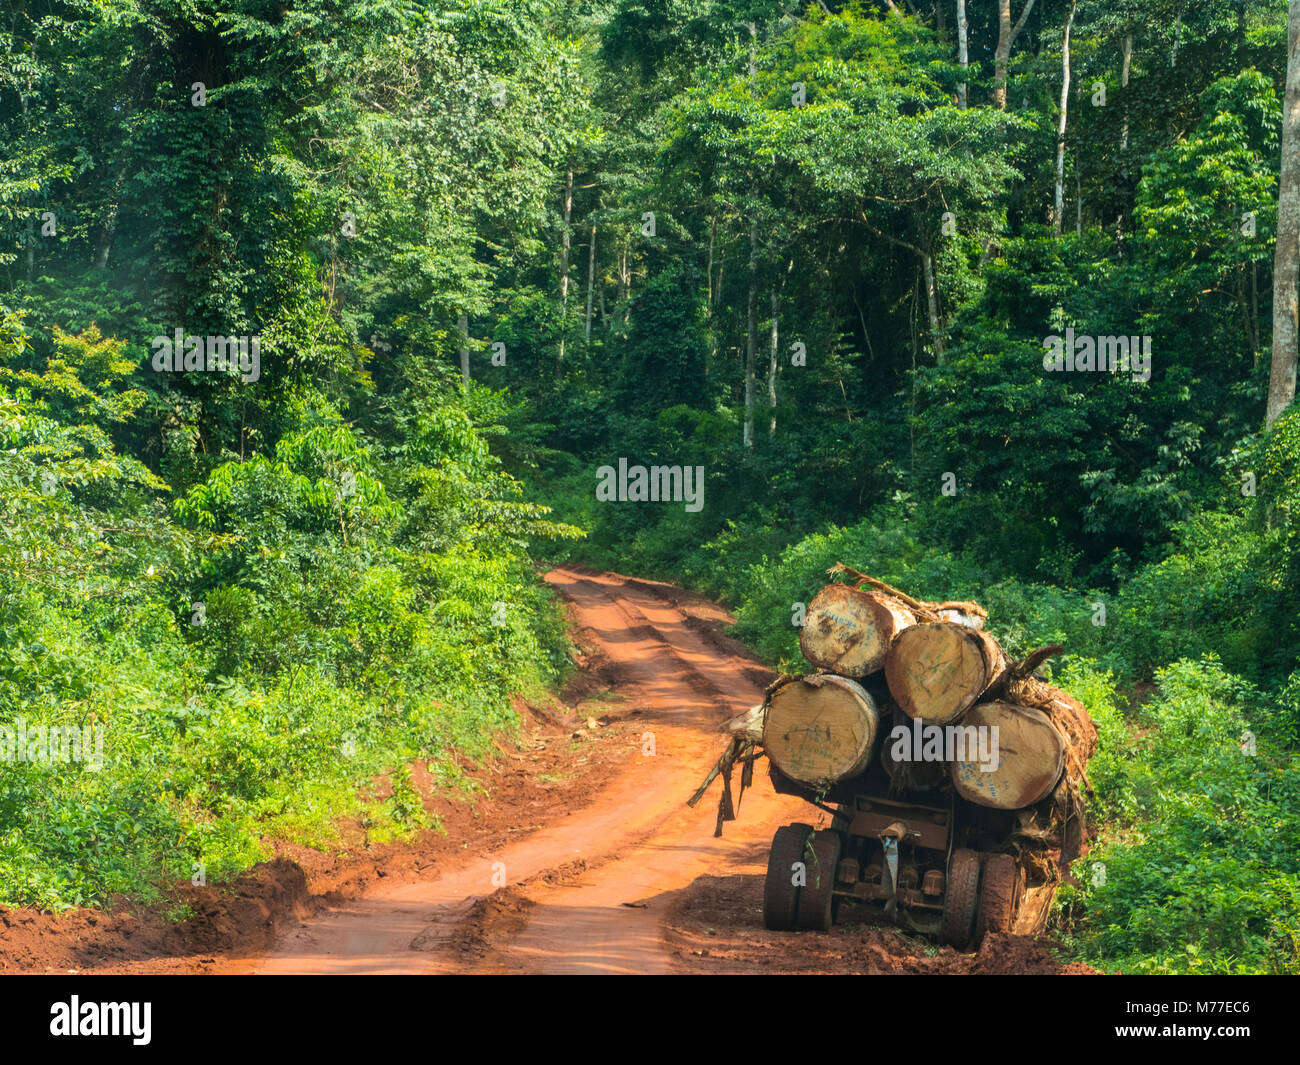 Logging truck in the jungle, Yokadouma, Eastern Cameroon, Africa Stock Photo